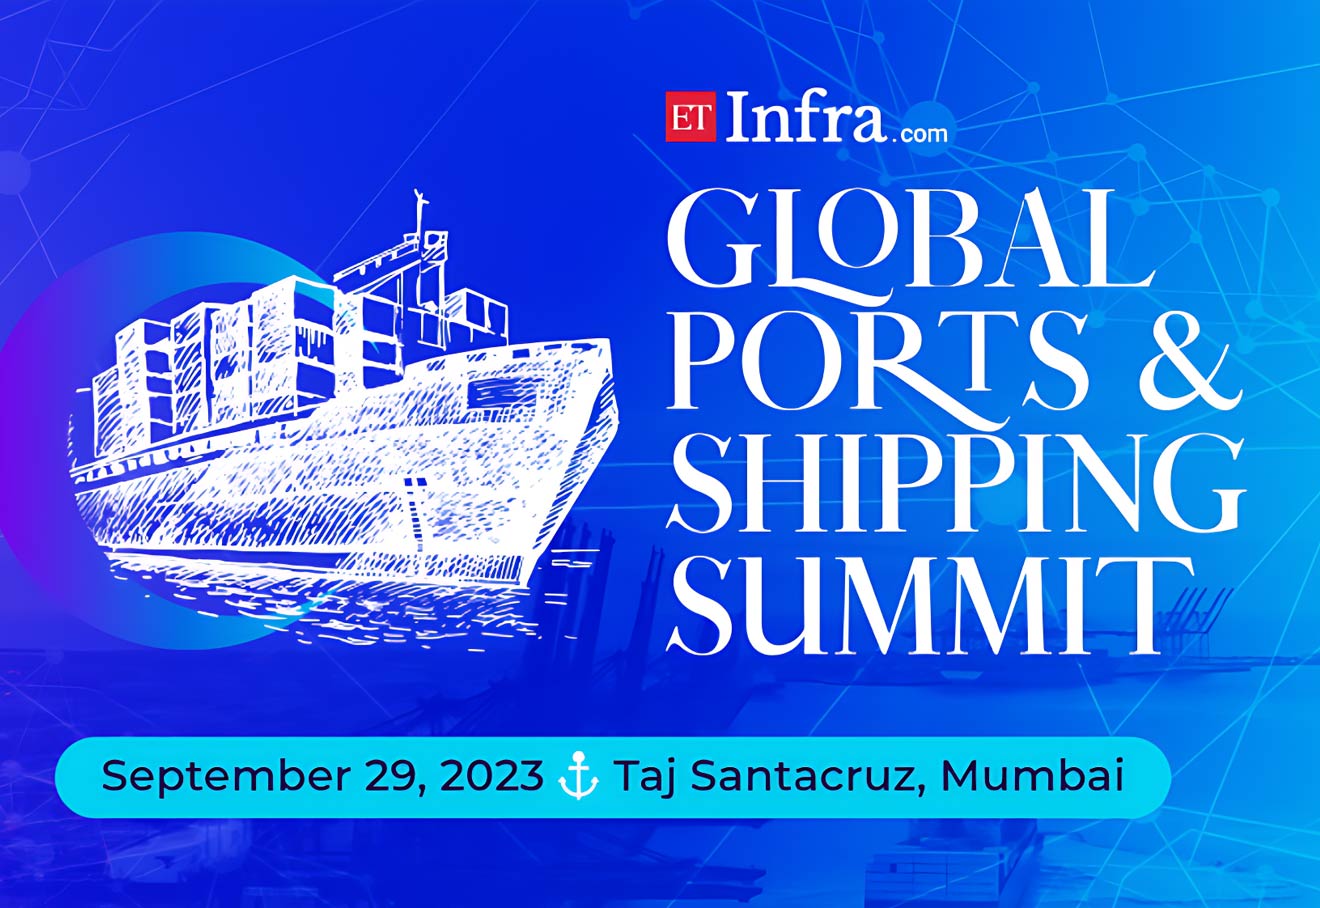 Global Ports & Shipping Summit To Be Held In Mumbai Tomorrow